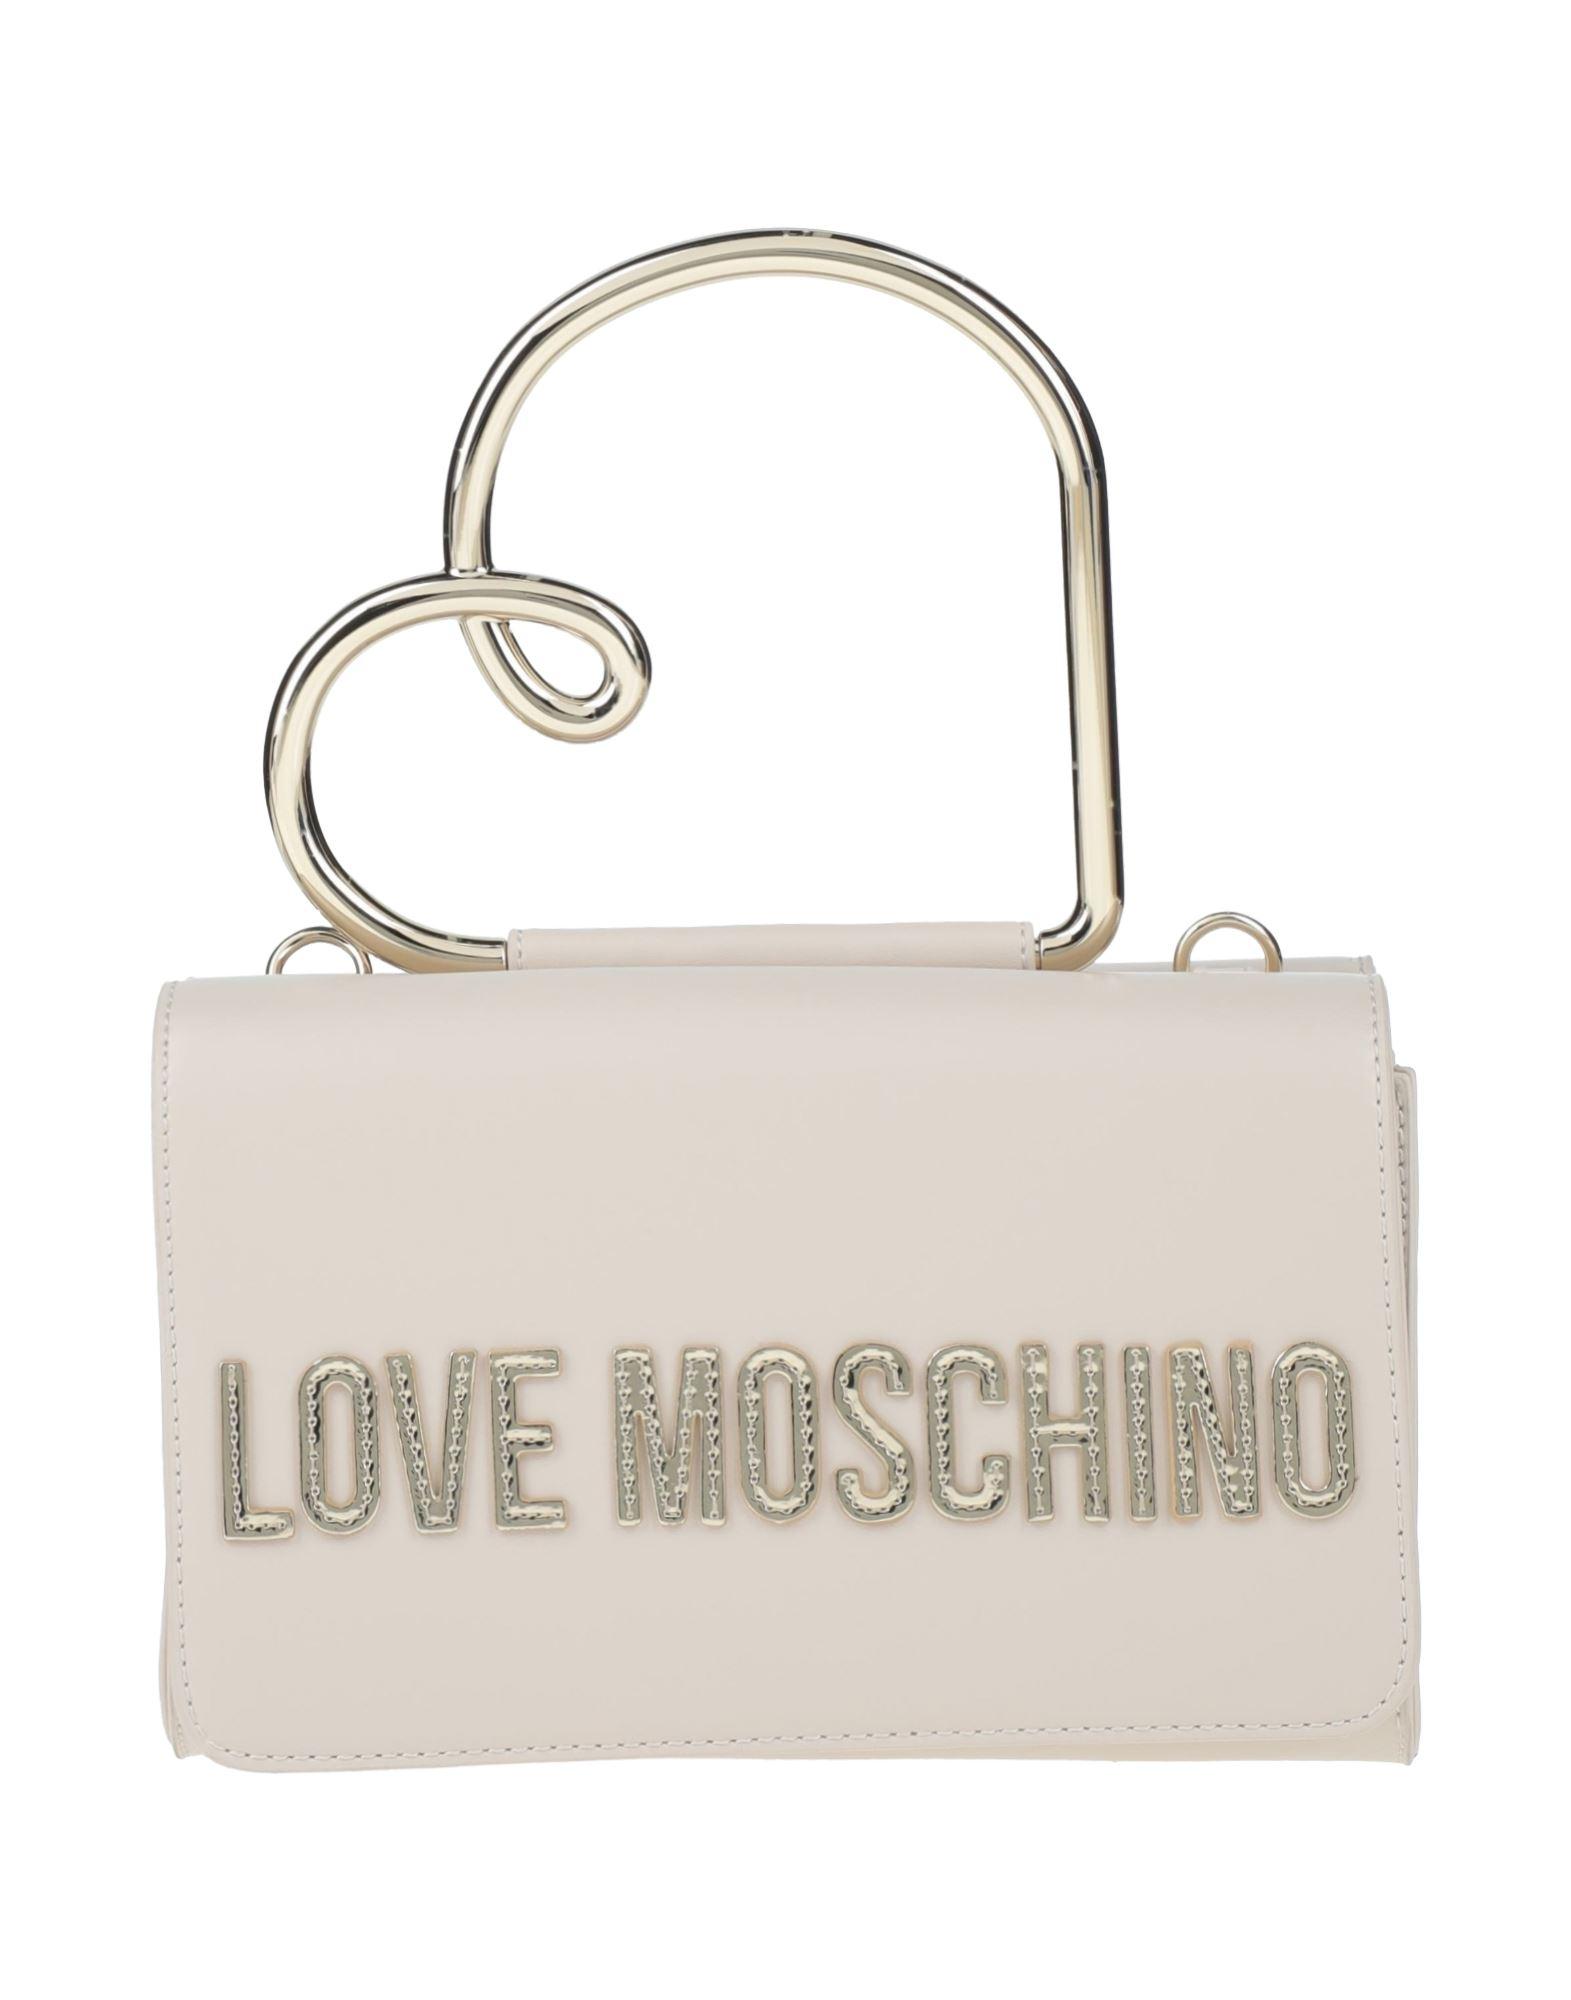 Love Moschino Handbag in Ivory (White) - Lyst